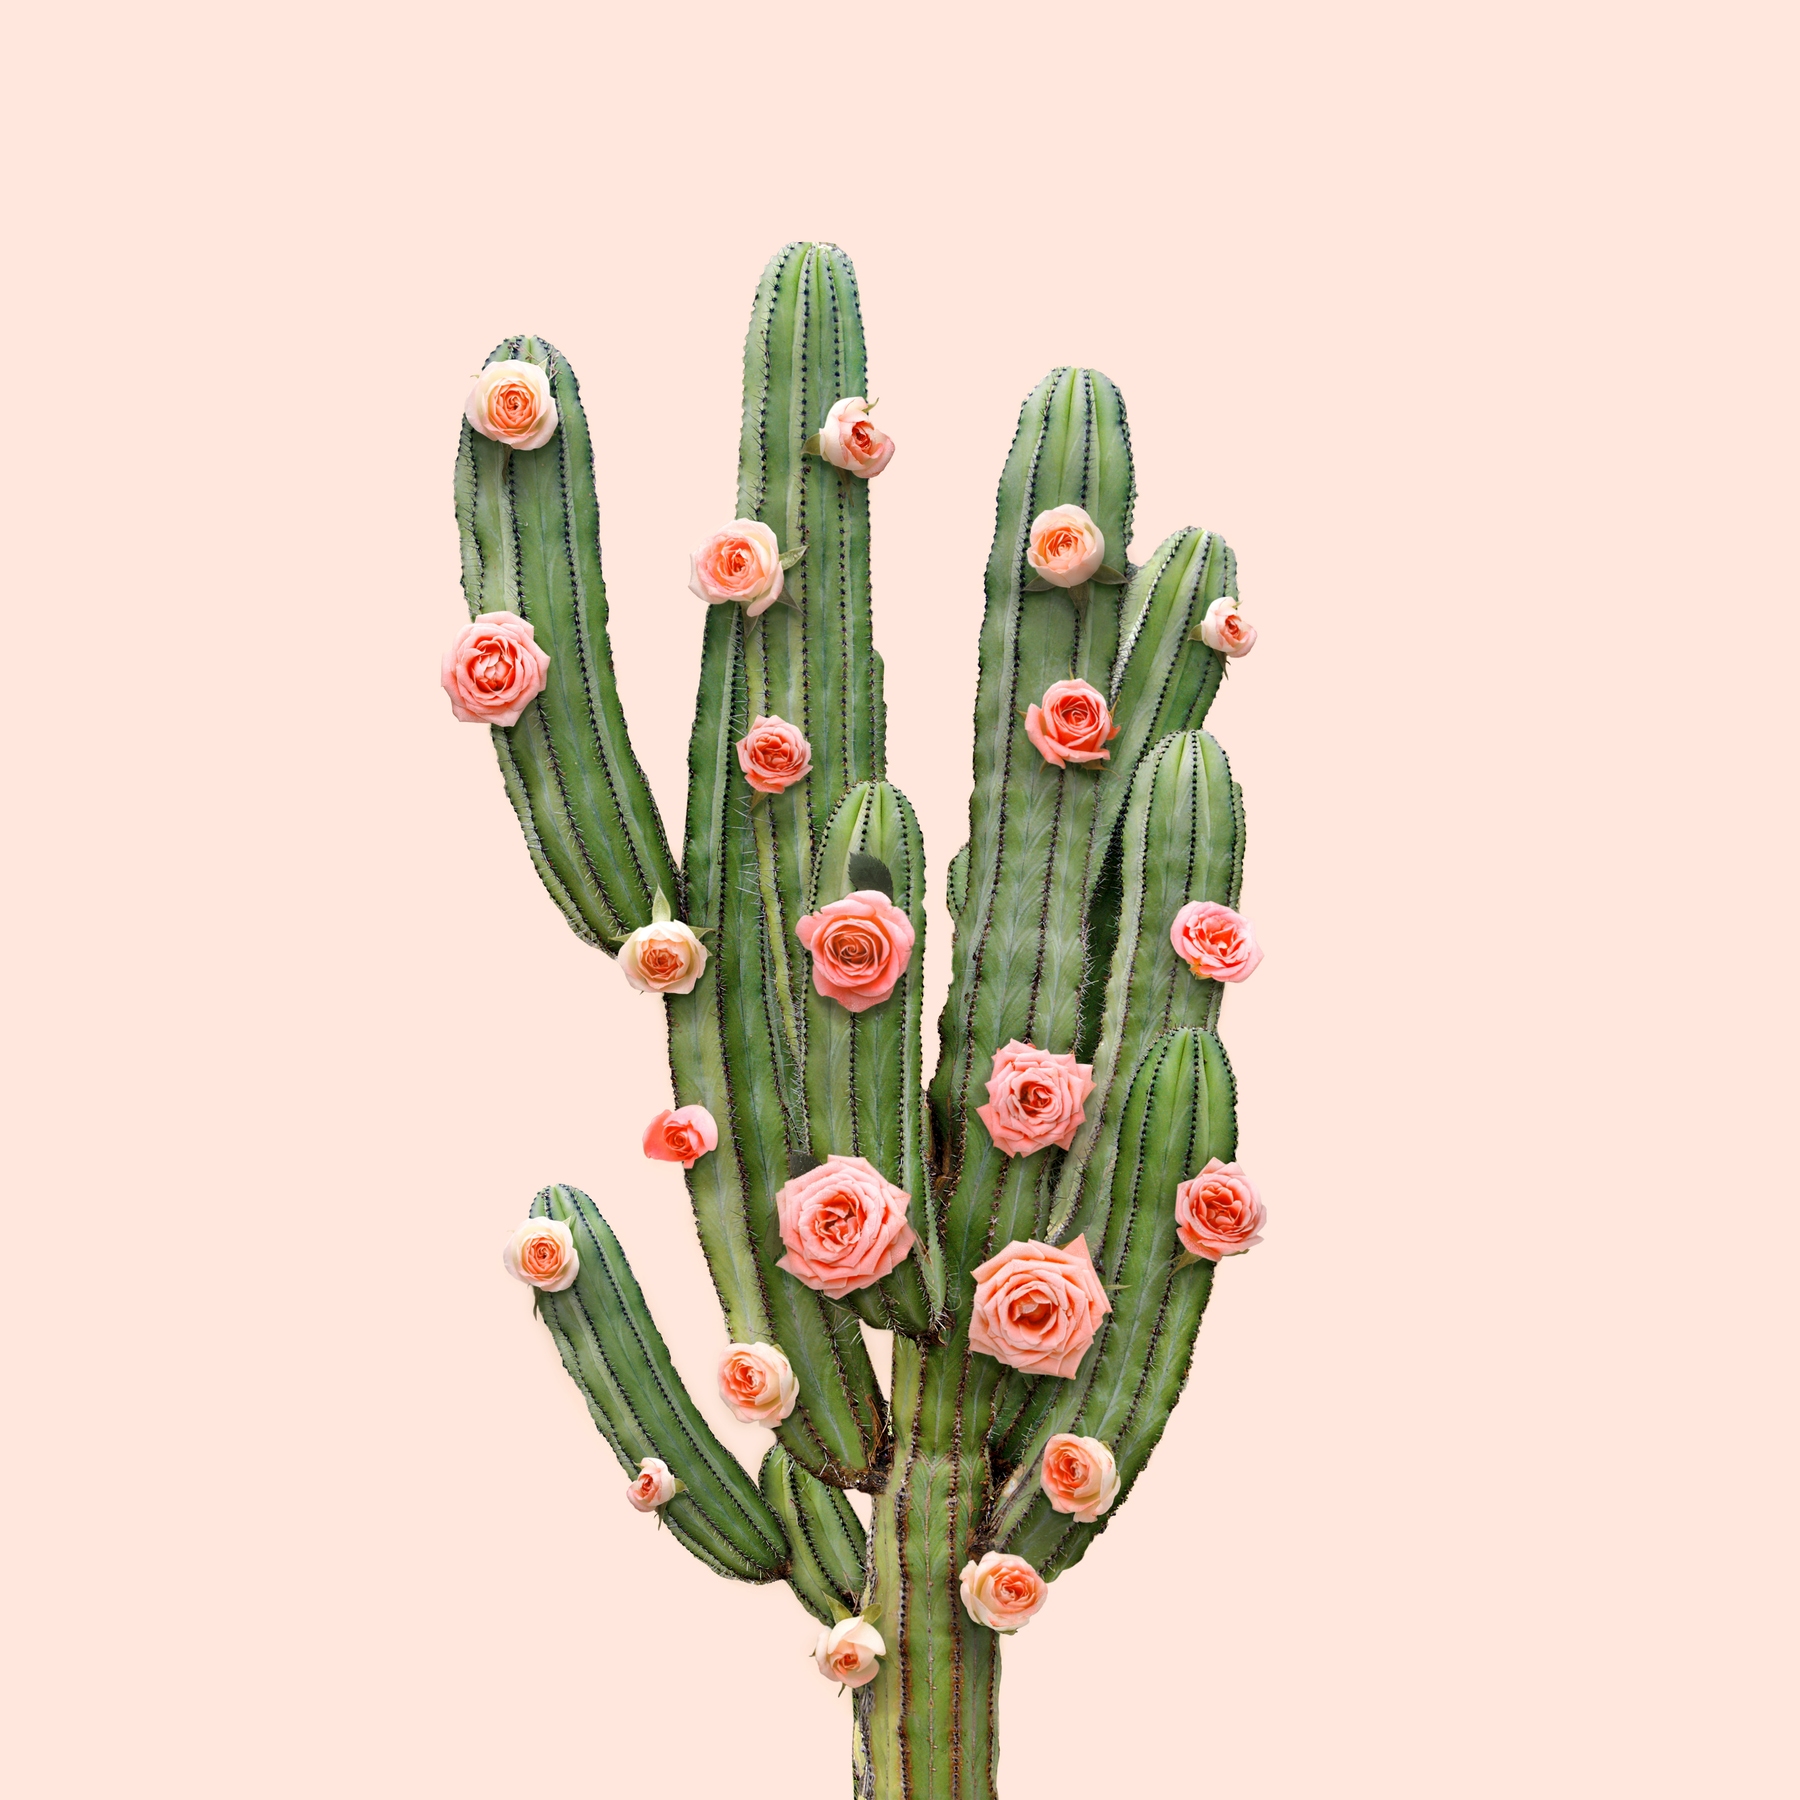 Cactus And Roses Wallpaper Buy Beautiful Wallpapers Online Happywall 